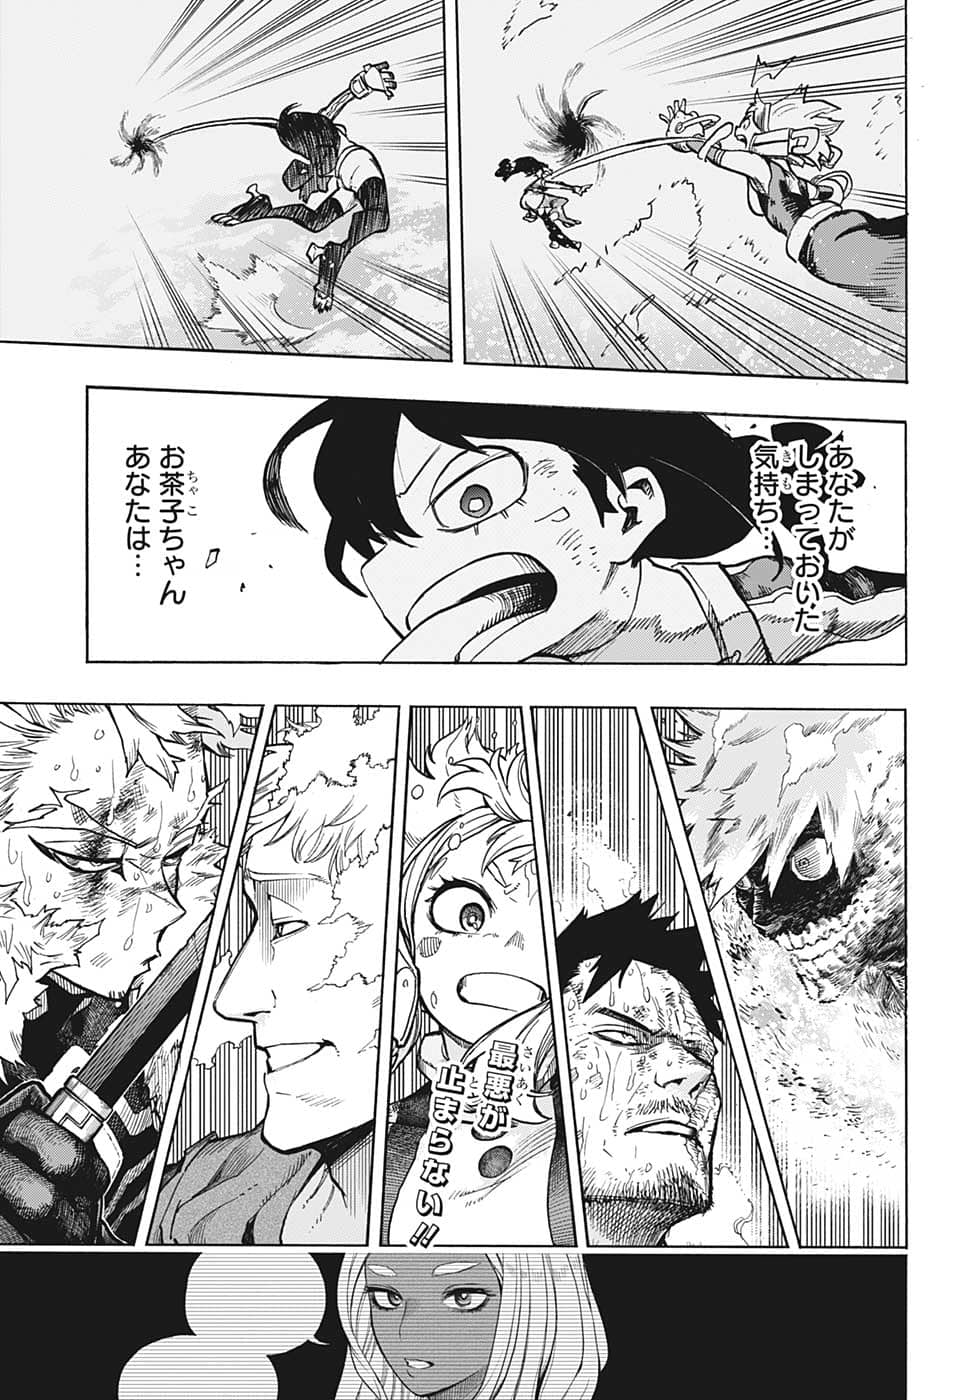 Boku no Hero Academia - Chapter 375 - Page 15